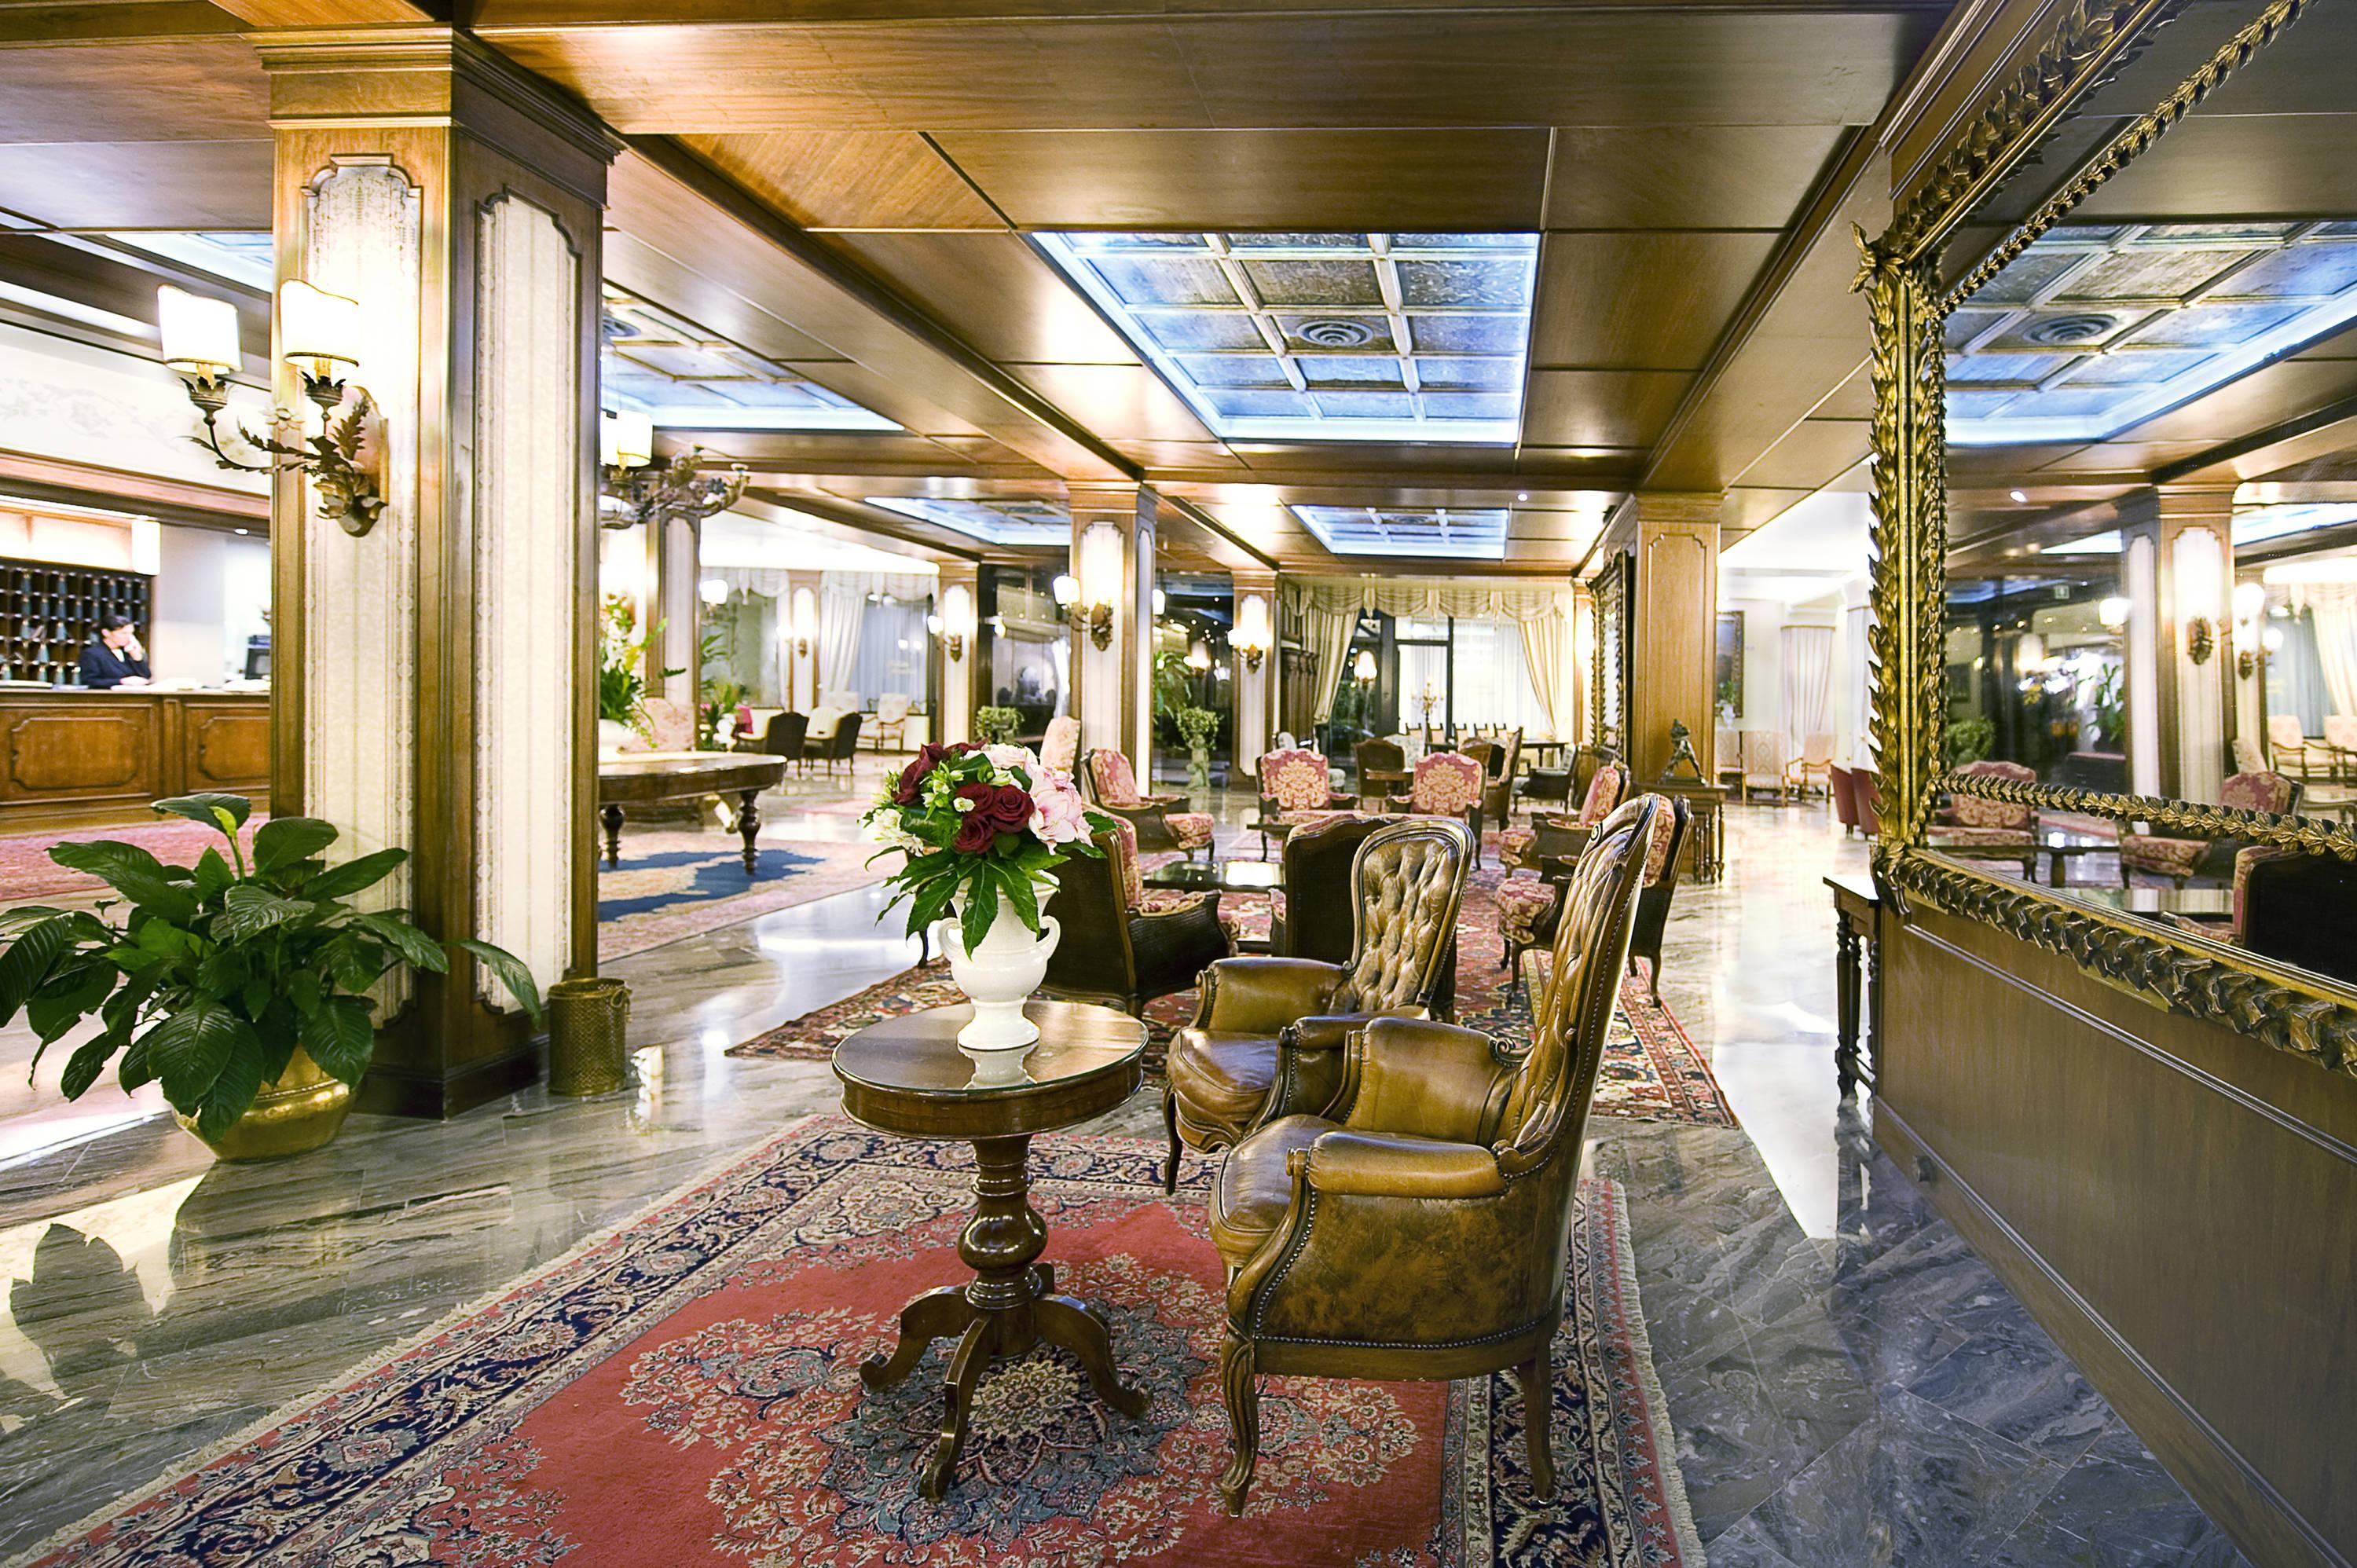 Лобби - Picture of The Chess Hotel, Paris - Tripadvisor